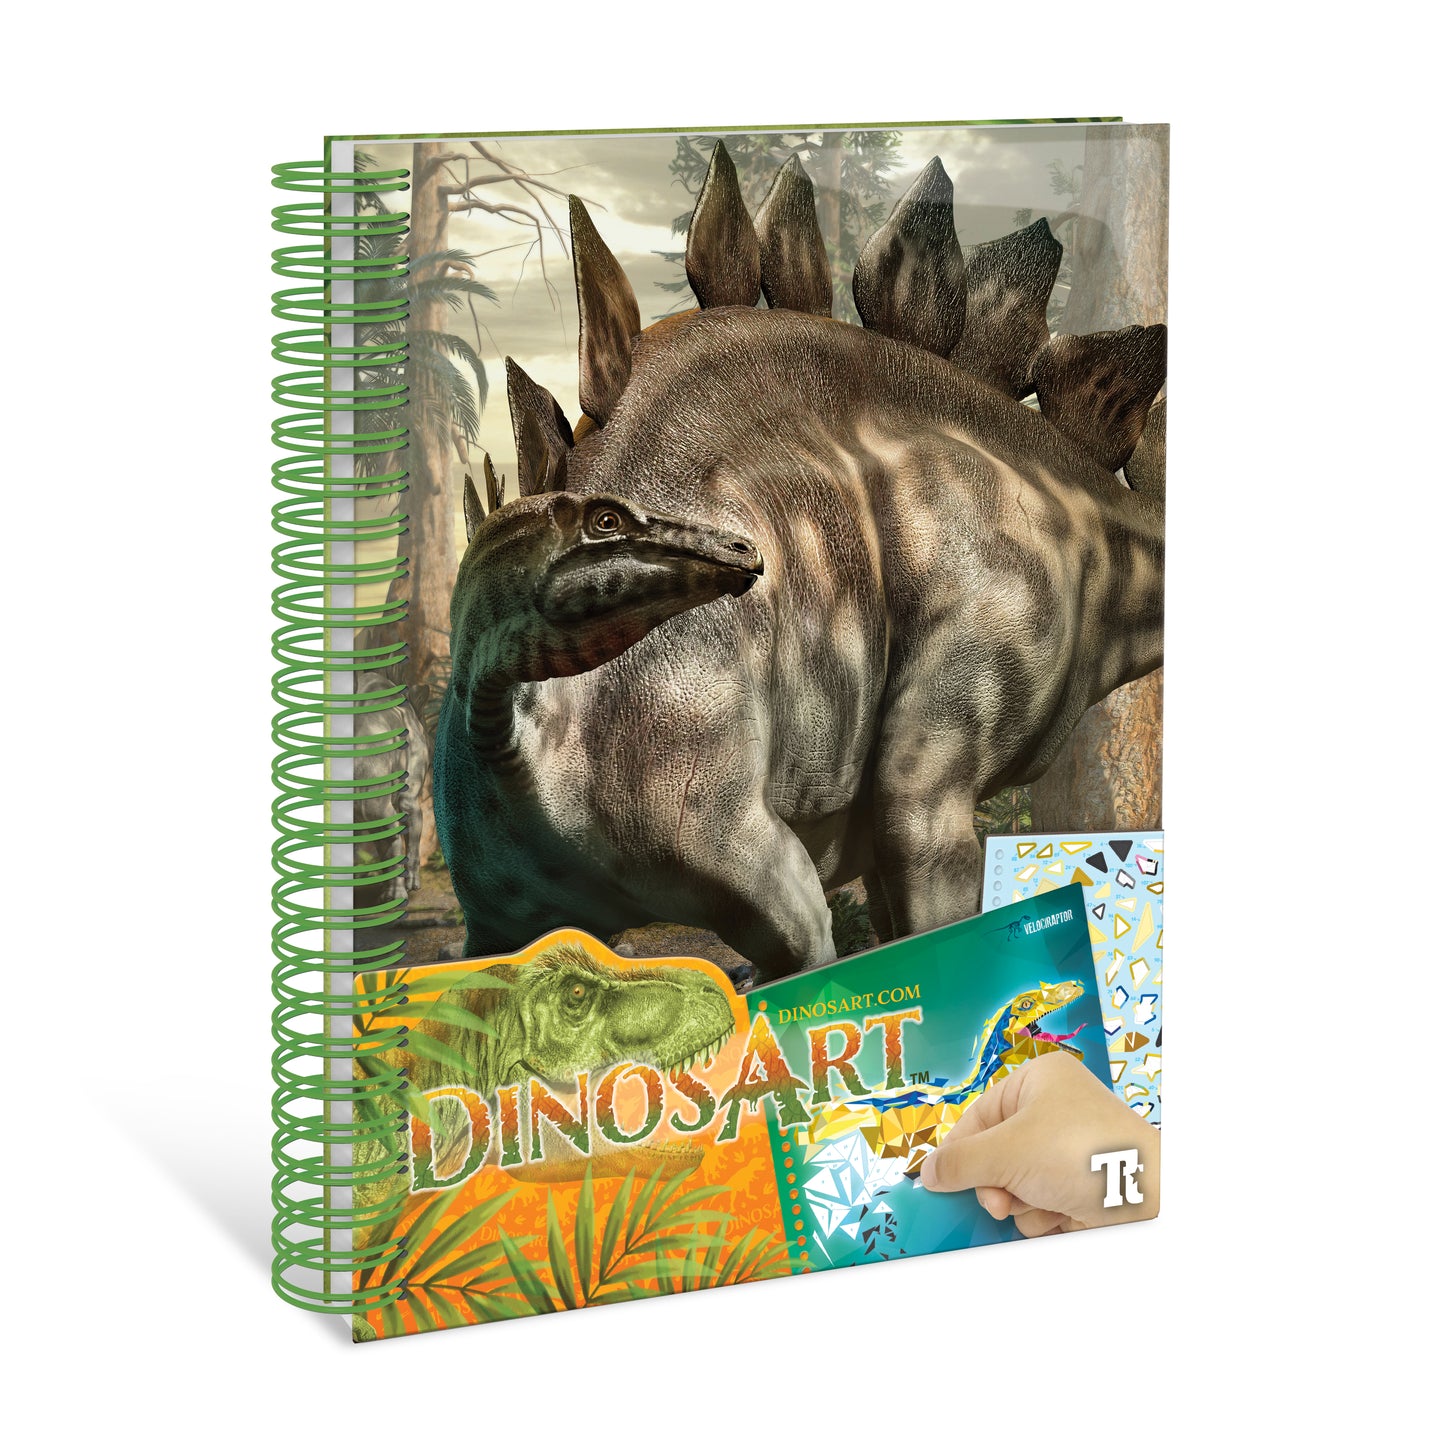 Dinosart Creative Book - Sticker by Number